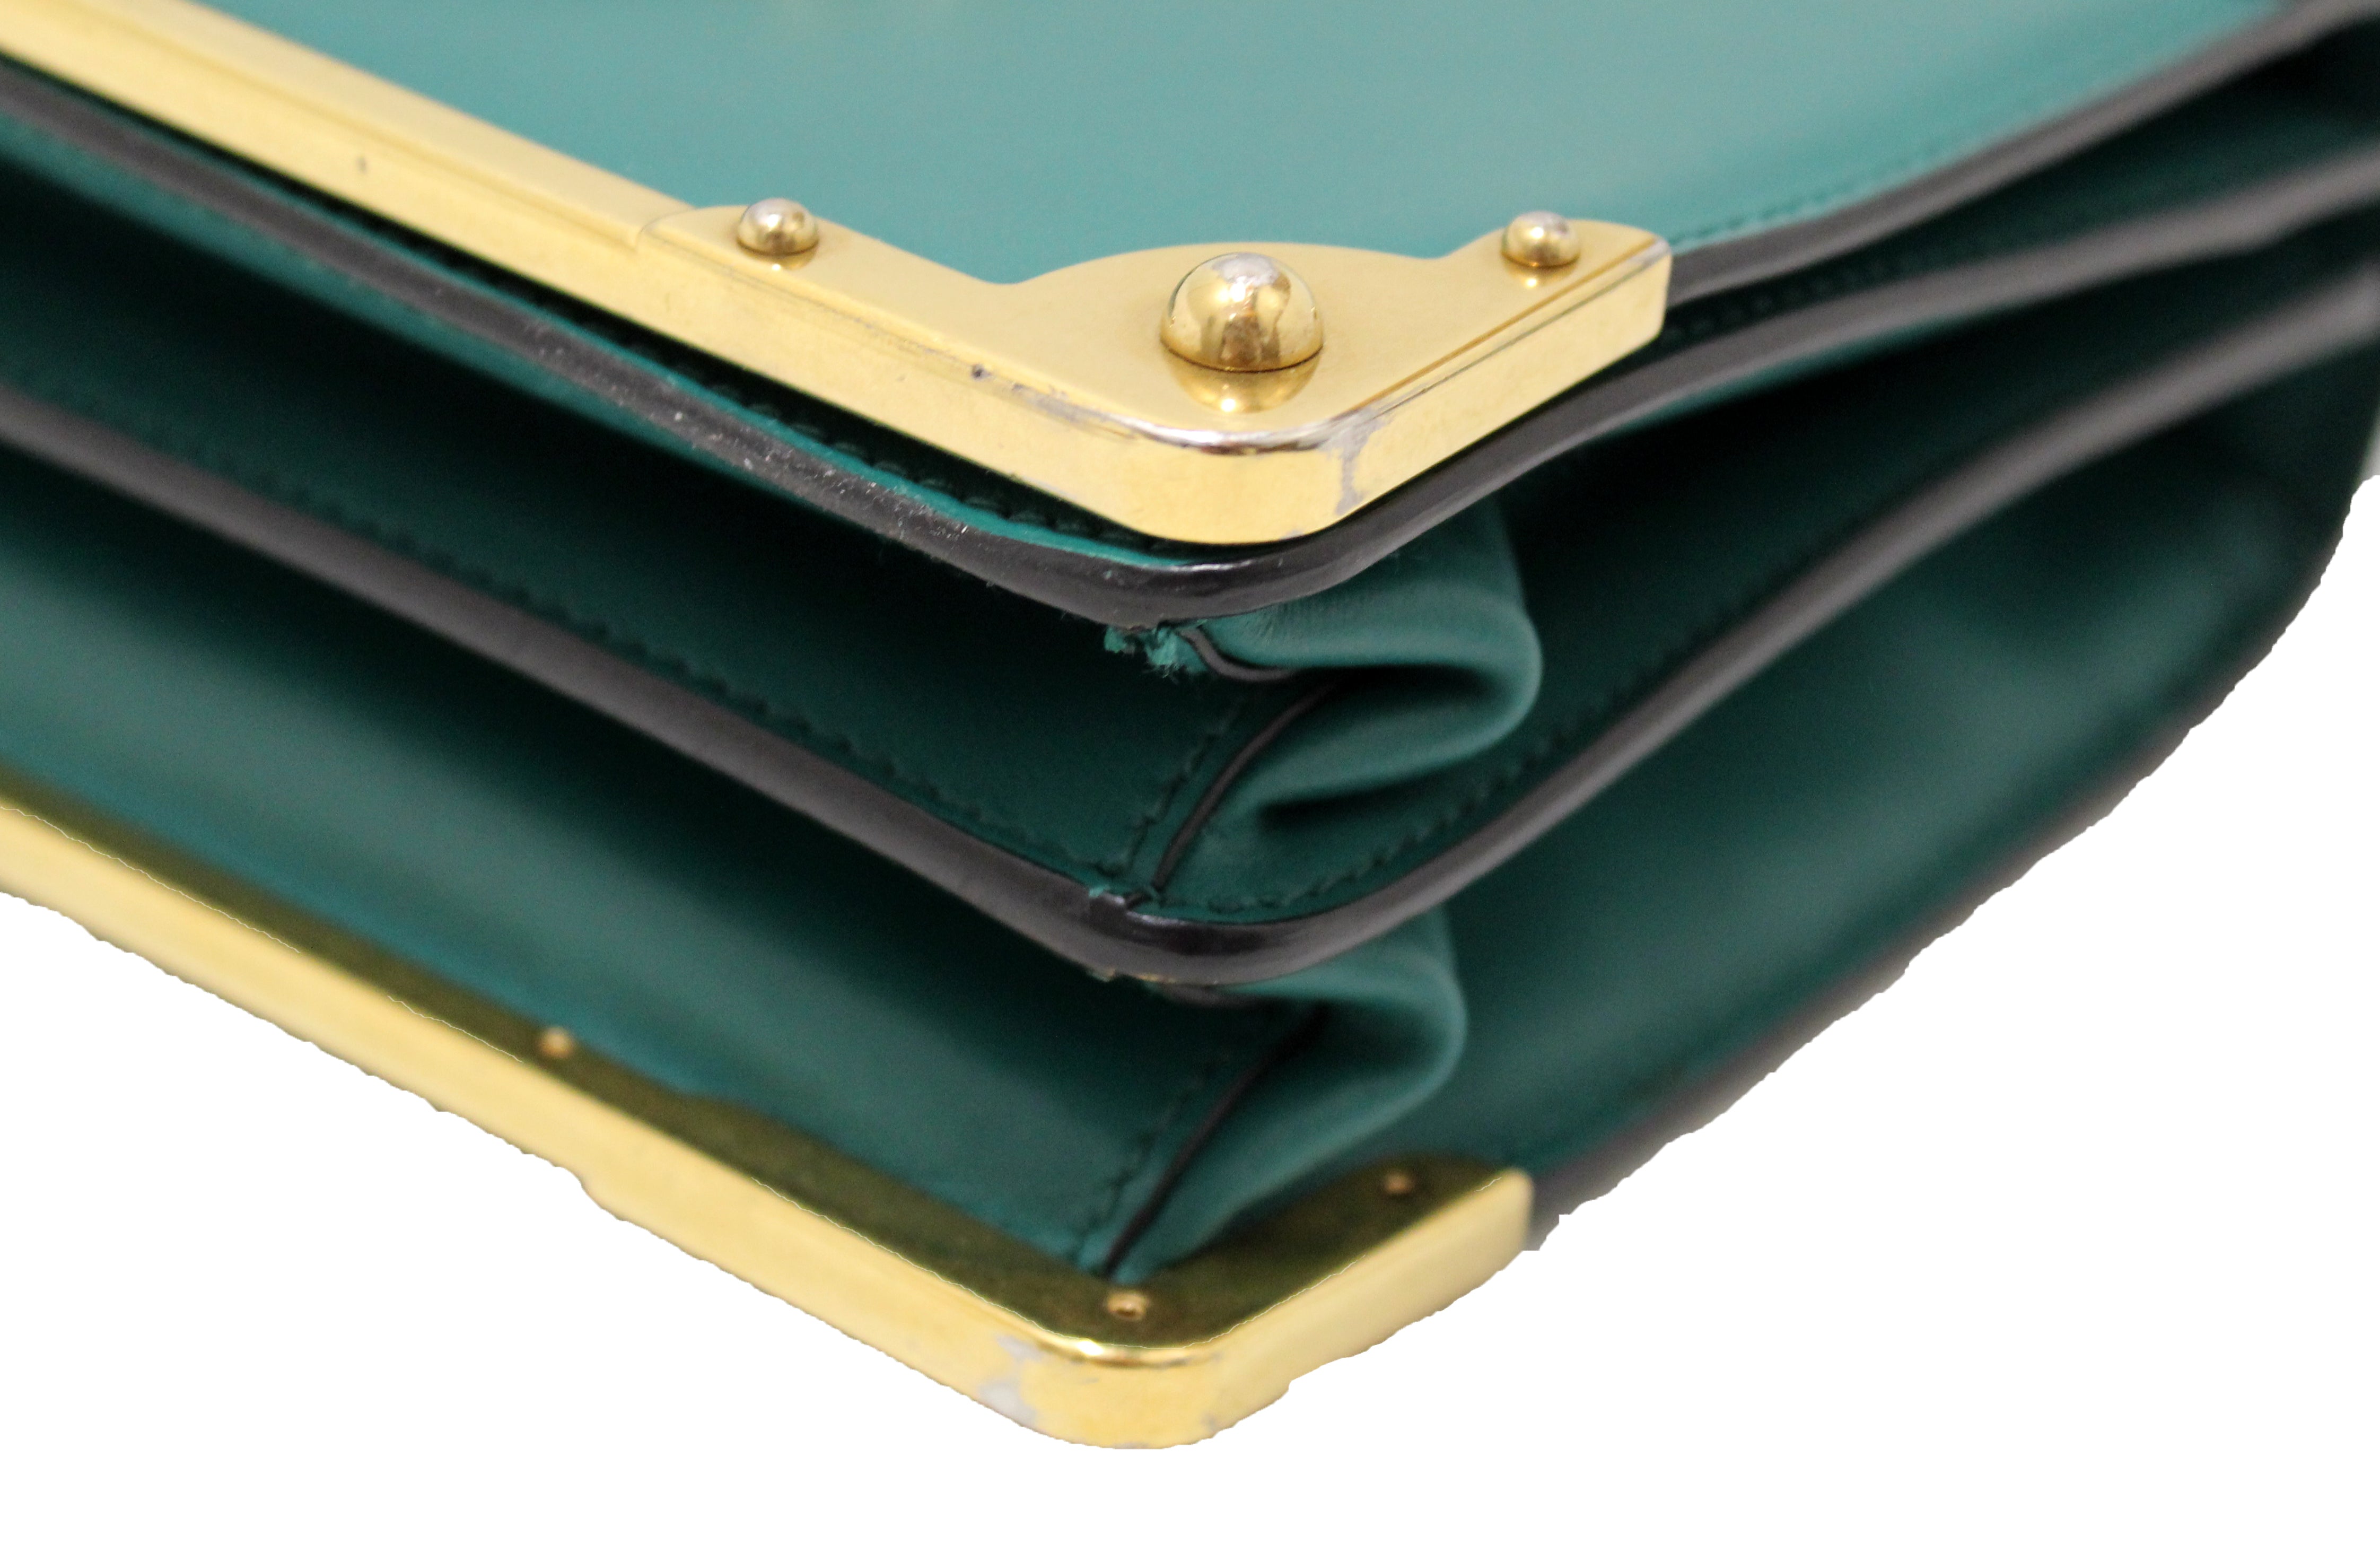 Cahier leather crossbody bag Prada Green in Leather - 25931912